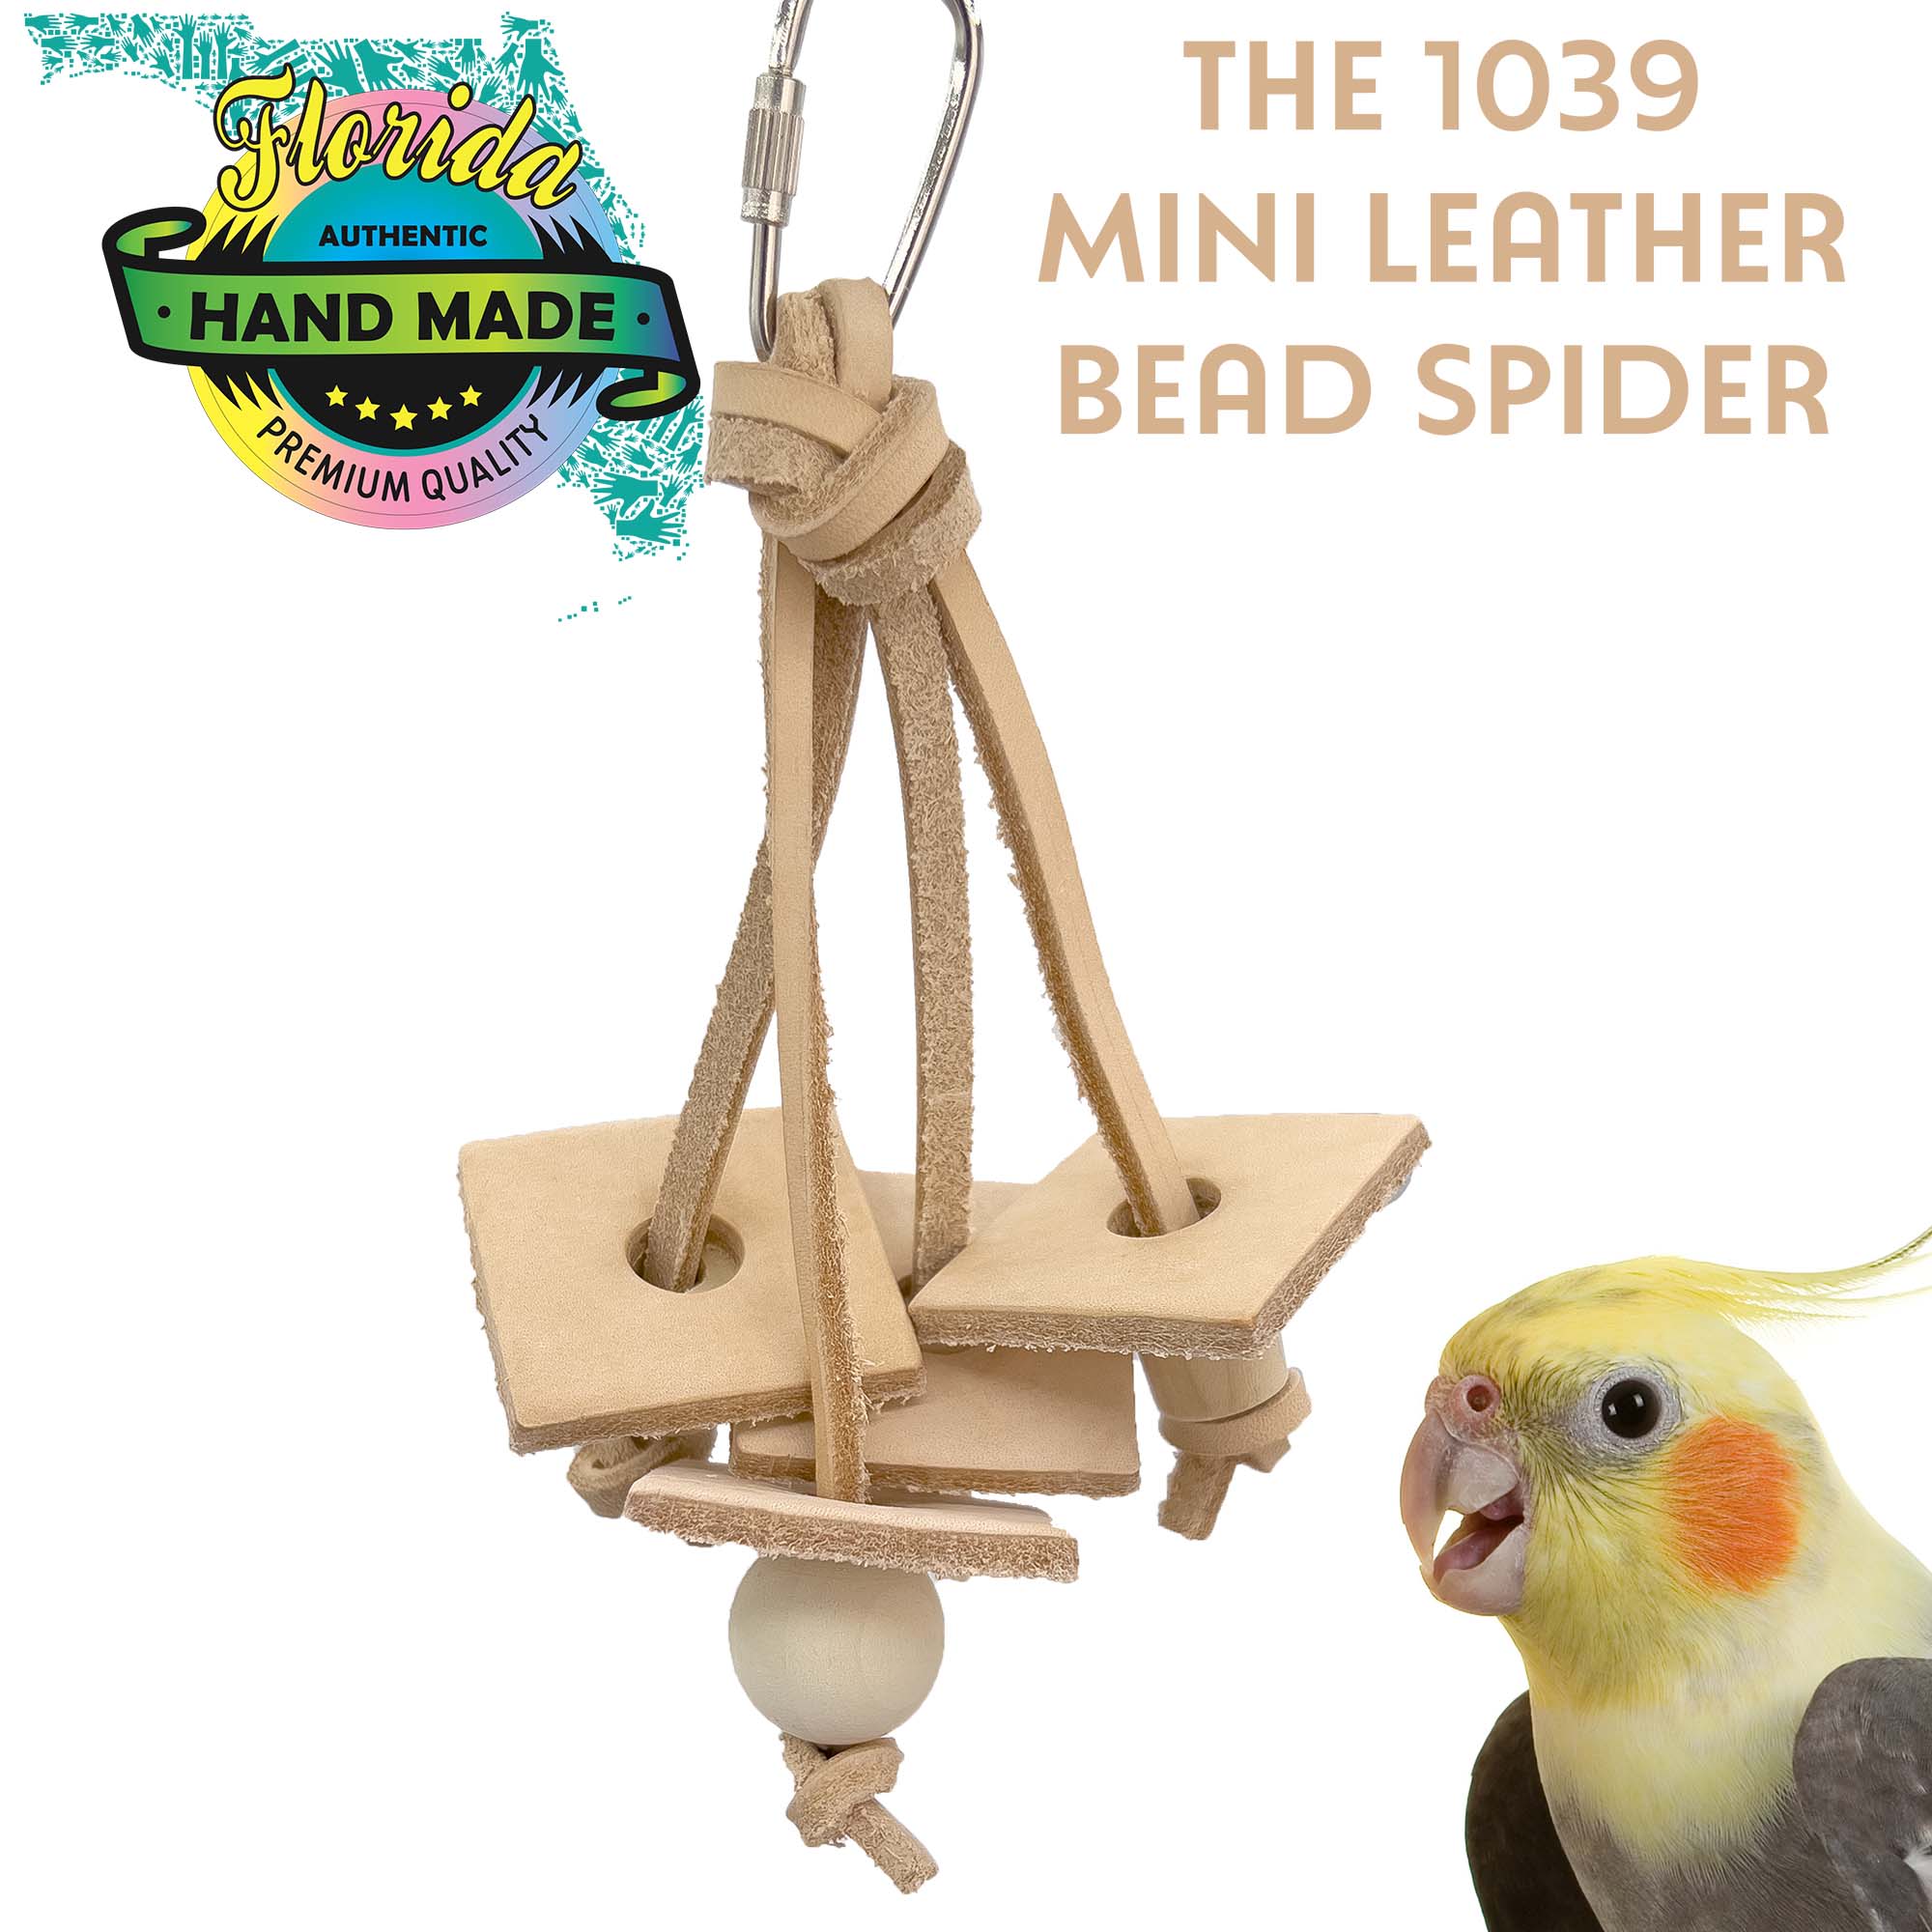 1039 Mini Leather Bead Spider